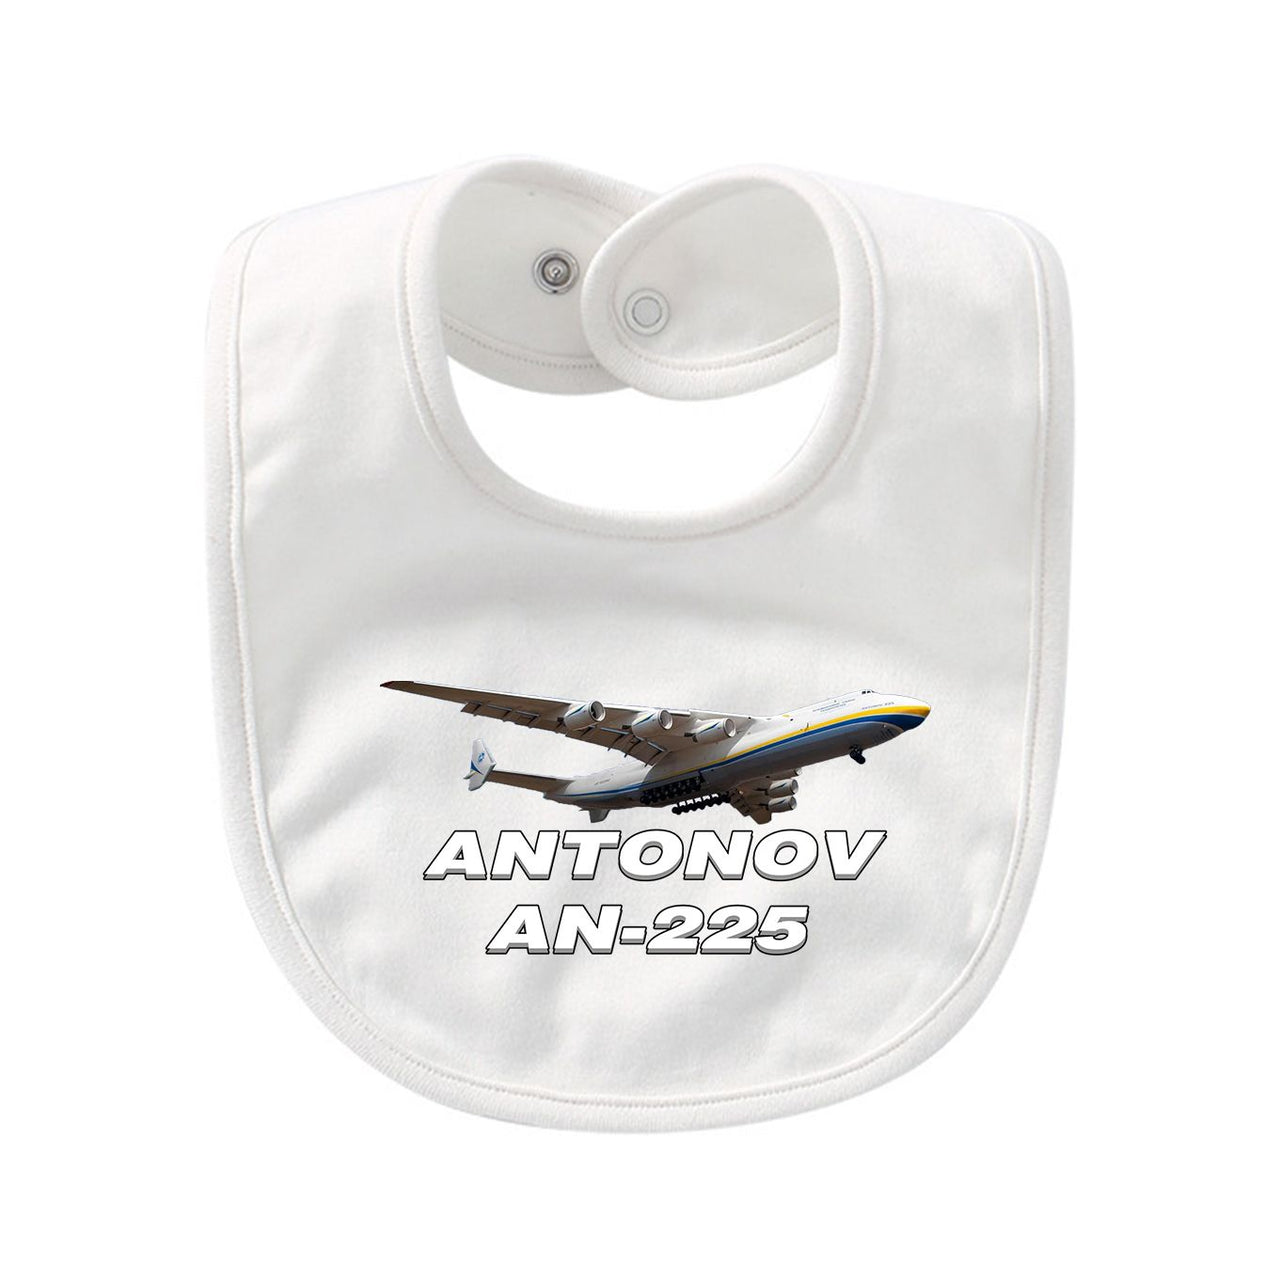 Antonov AN-225 (15) Designed Baby Saliva & Feeding Towels